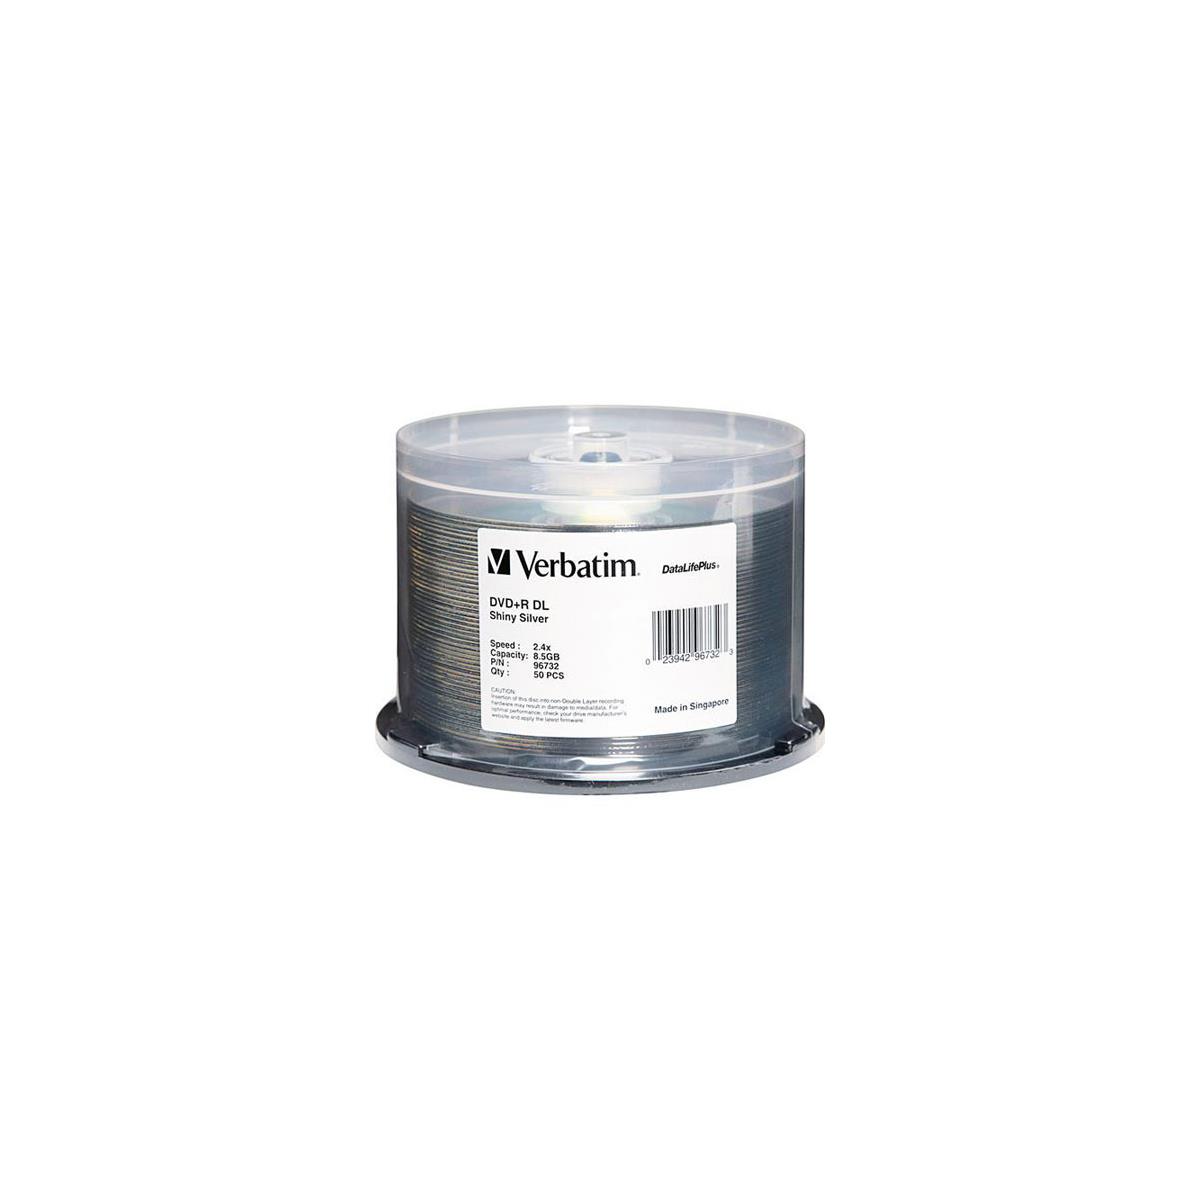 Image of Verbatim 8.5GB 8x DVD+R DL DataLifePlus Silver Recordable Disc